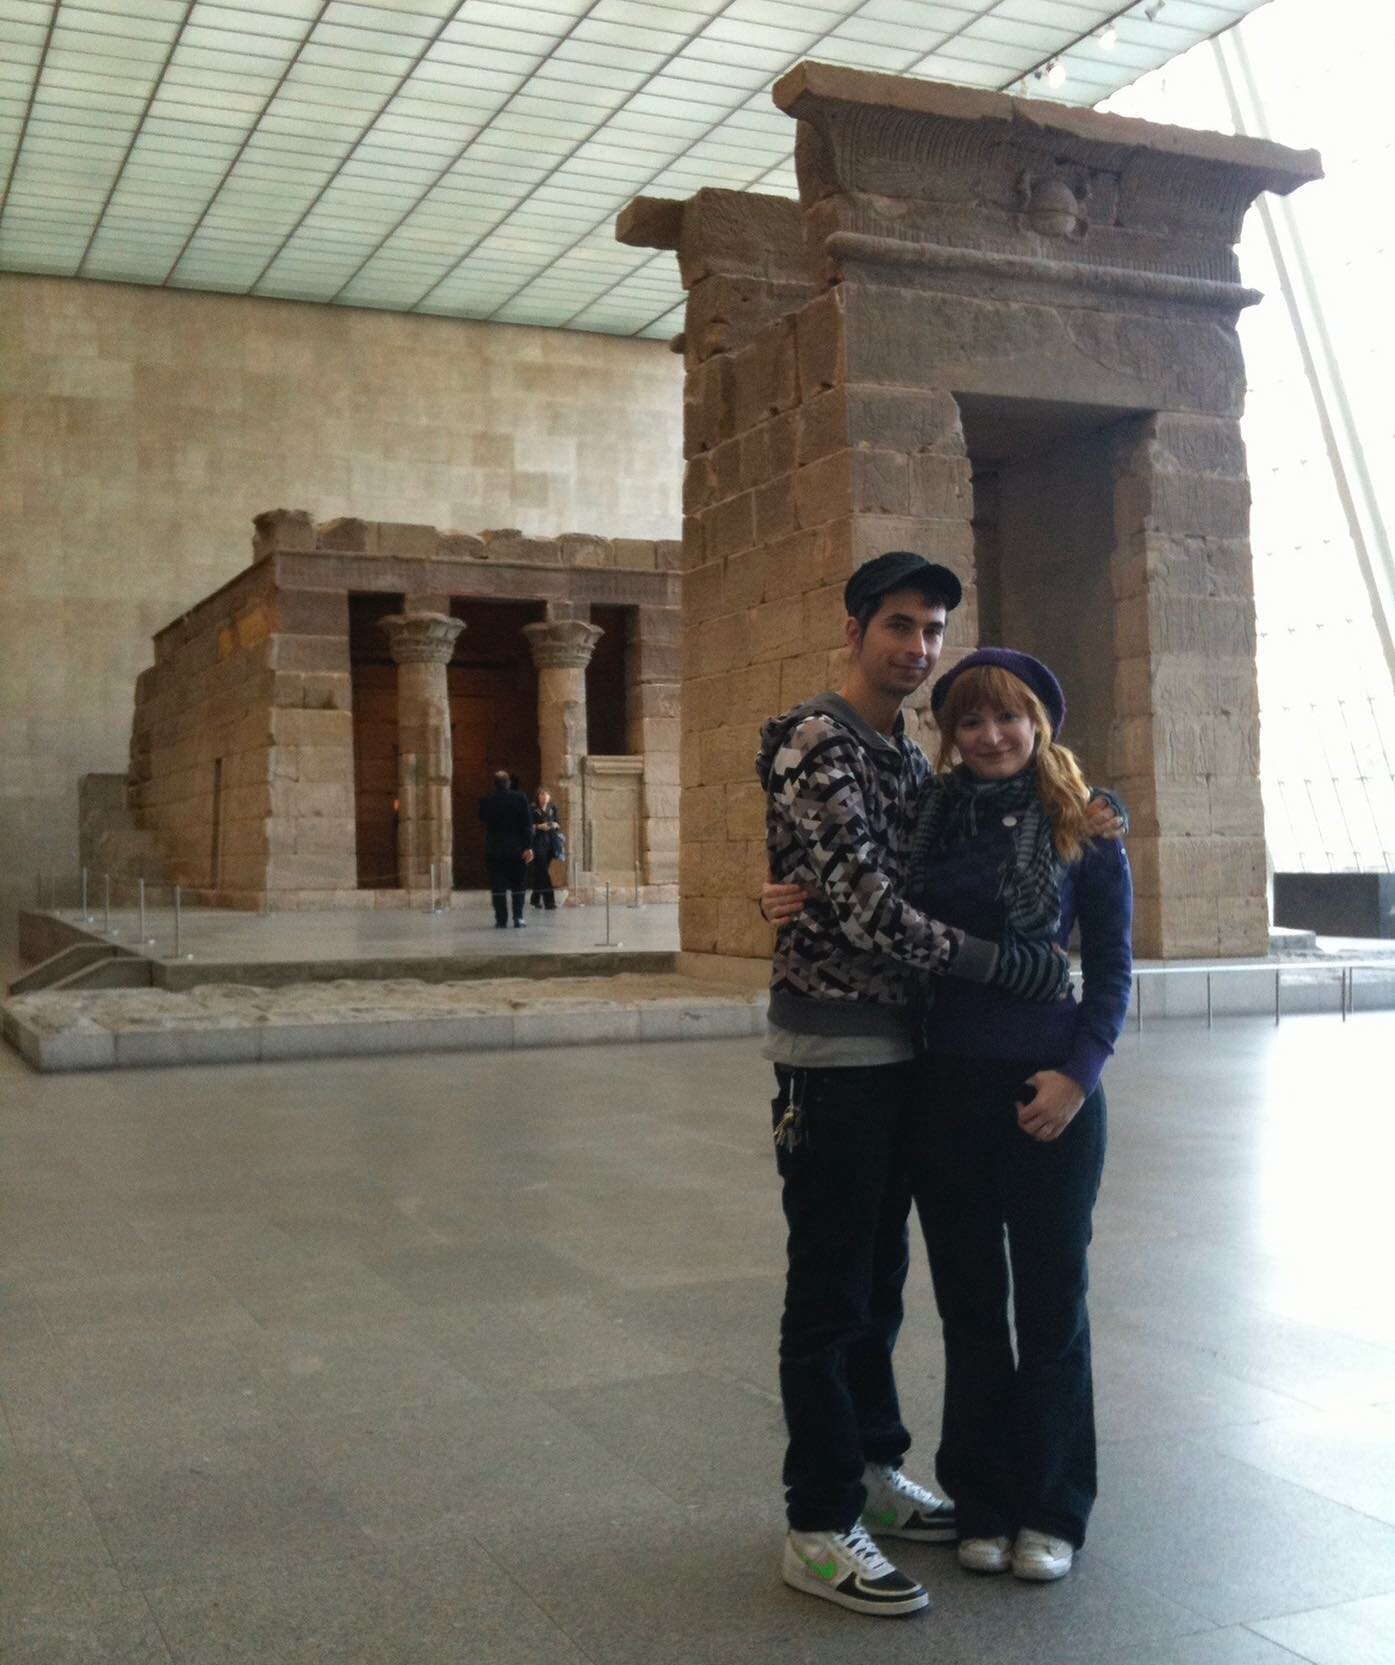 16 years ago. Temple of Dendur. Metropolitan Museum of Art. Engaged. @metmuseum